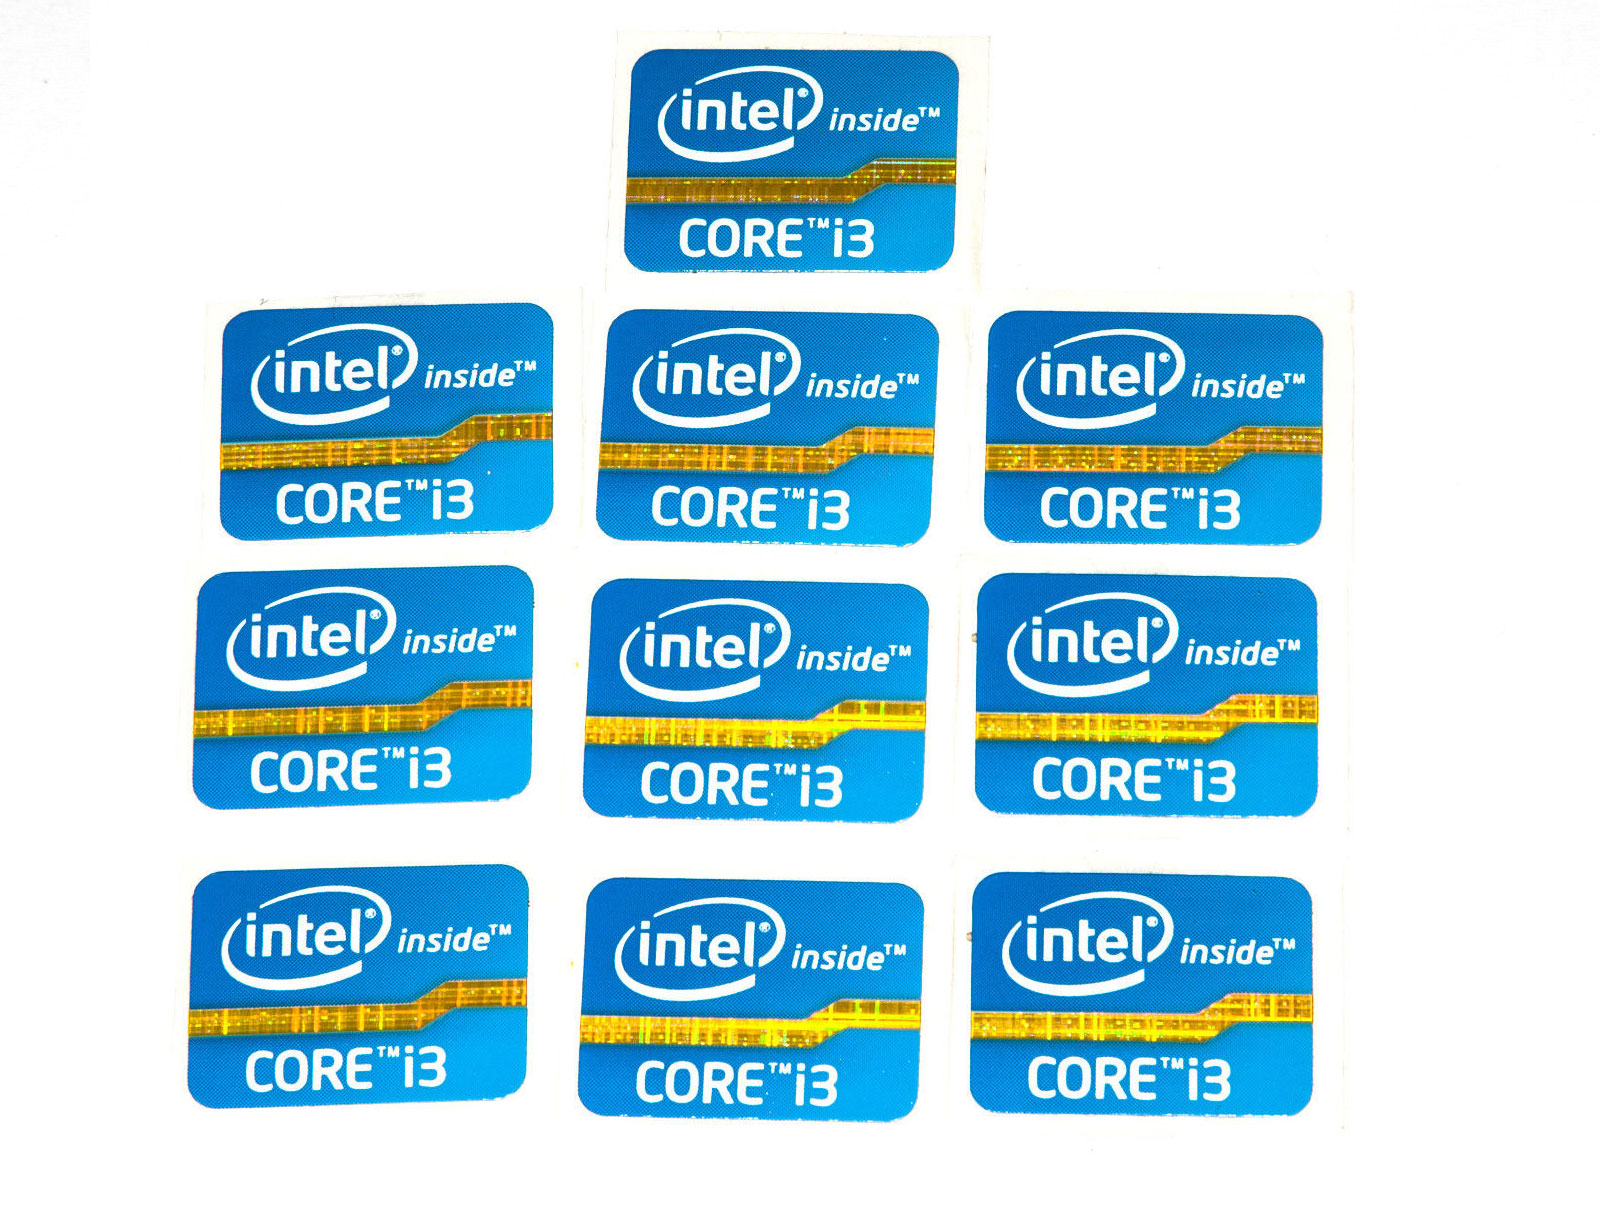 Intel Inside Core I3 Sticker Blau Blue 10x Stück pcs Aufkleber Label Logo 324129-001